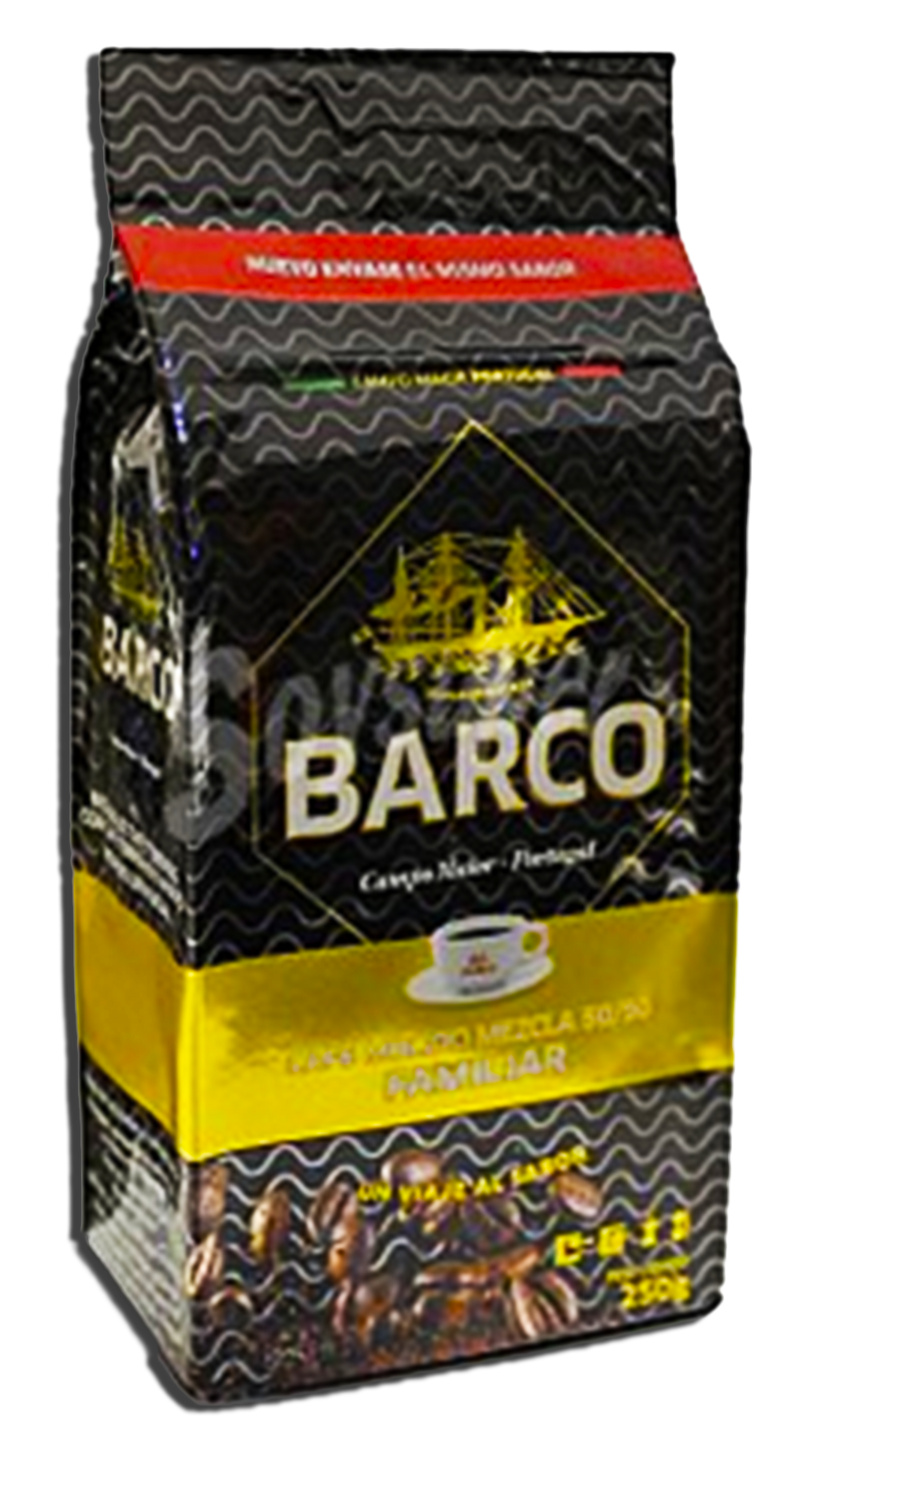 Cafe Barco " Camelo". Molido
250 grs.